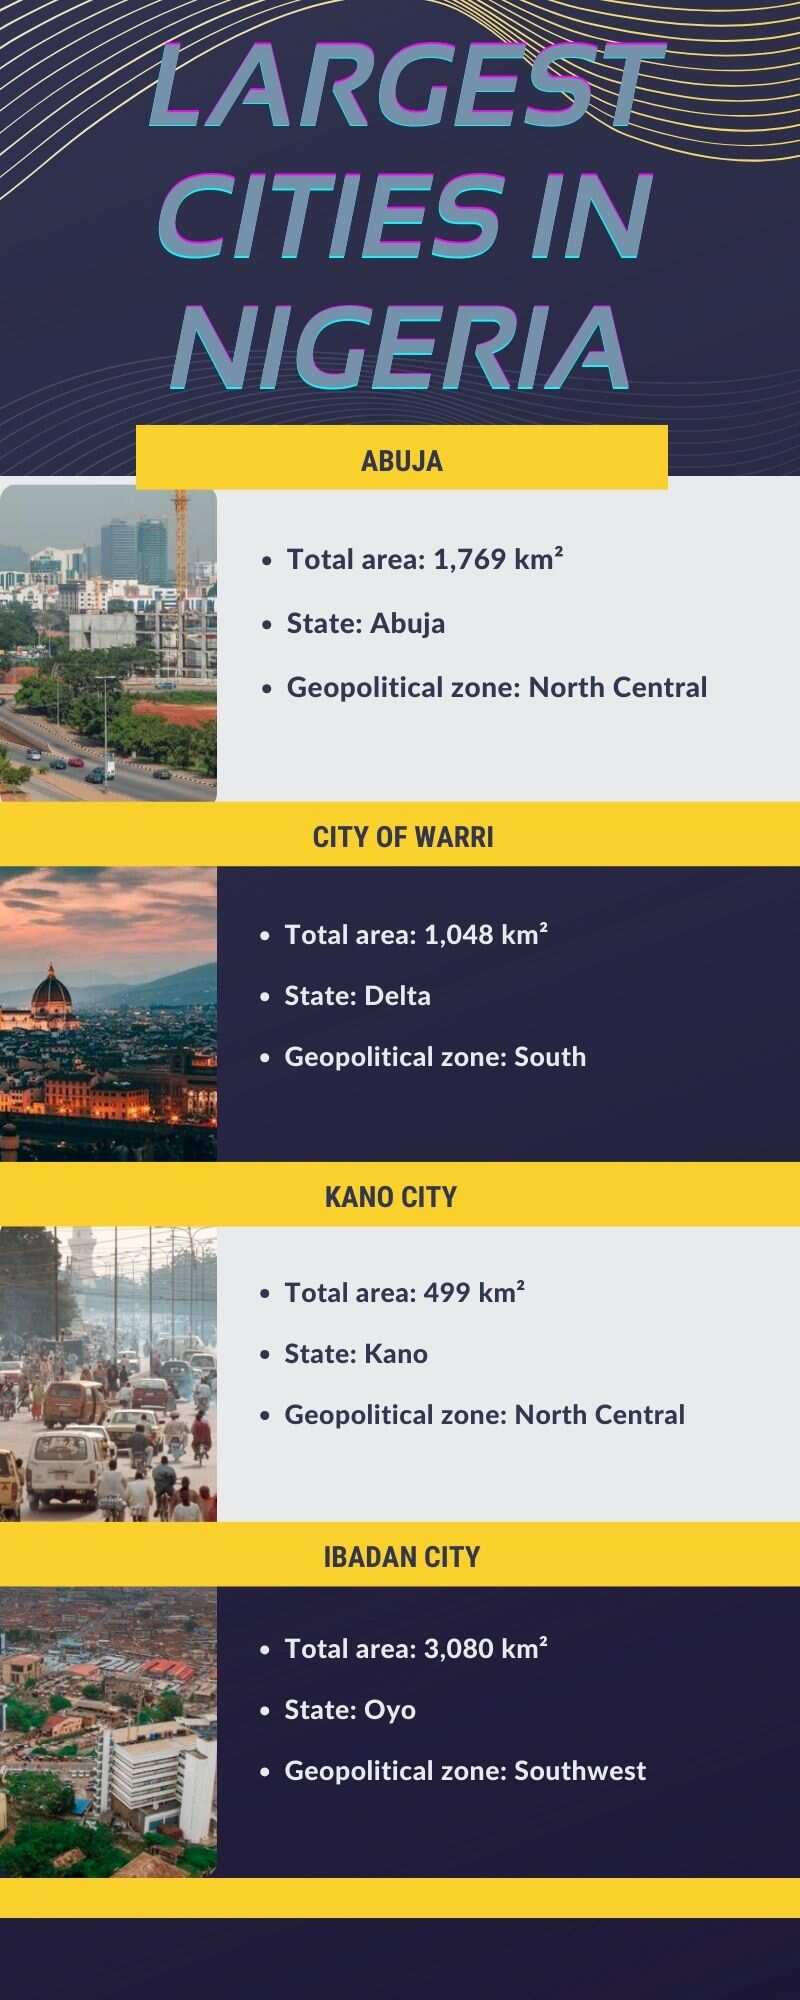 Cargest cities in Nigeria